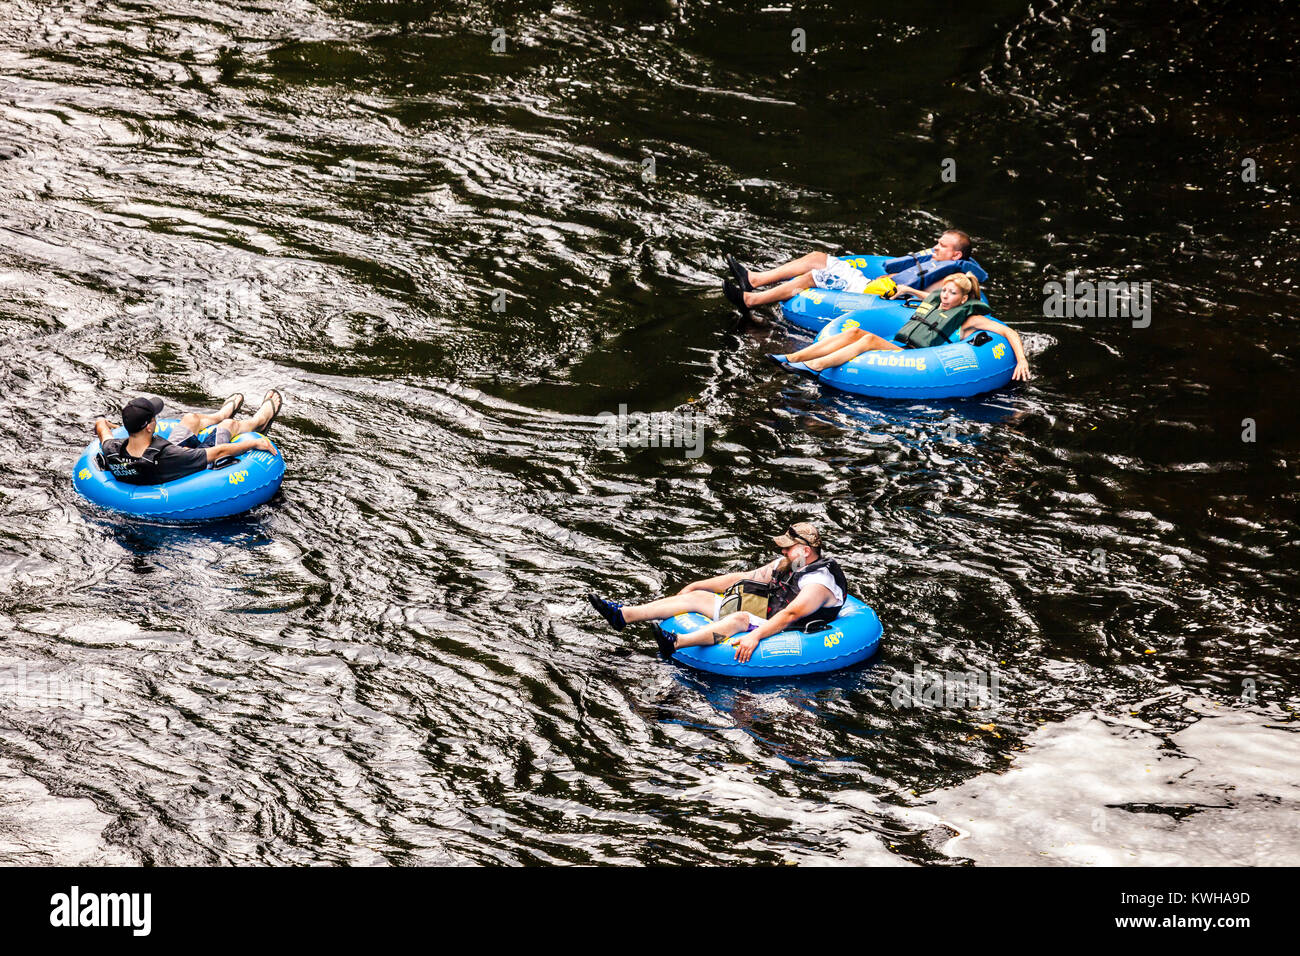 Farmington river tubing hi-res stock photography and images - Alamy